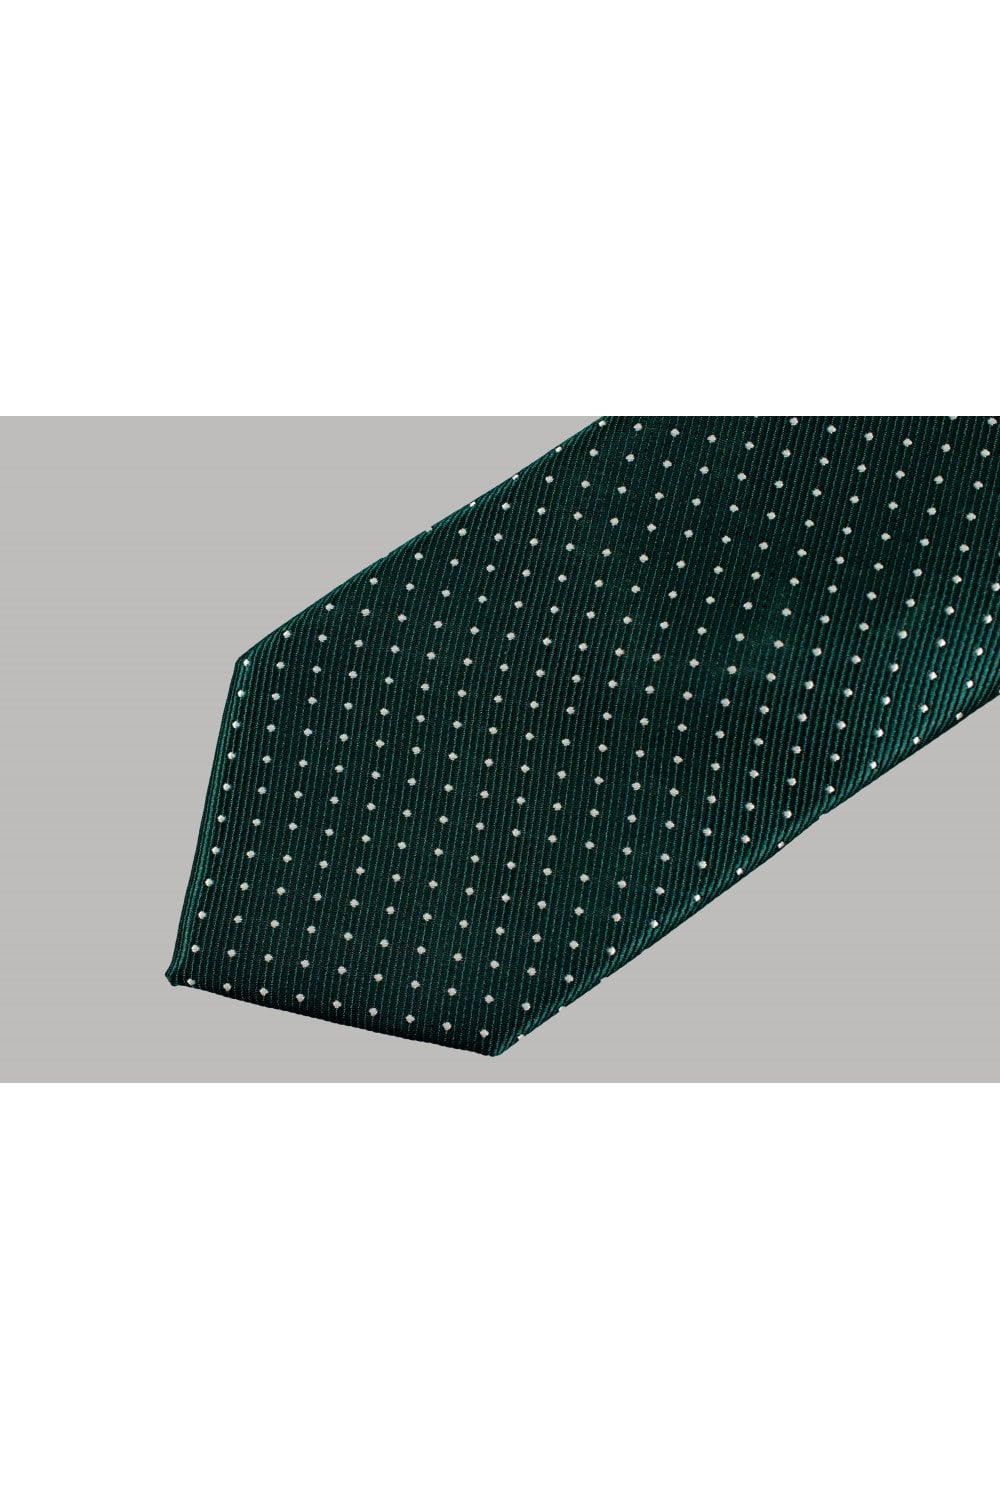 Necktie Set Olive Green Dots - Cavani